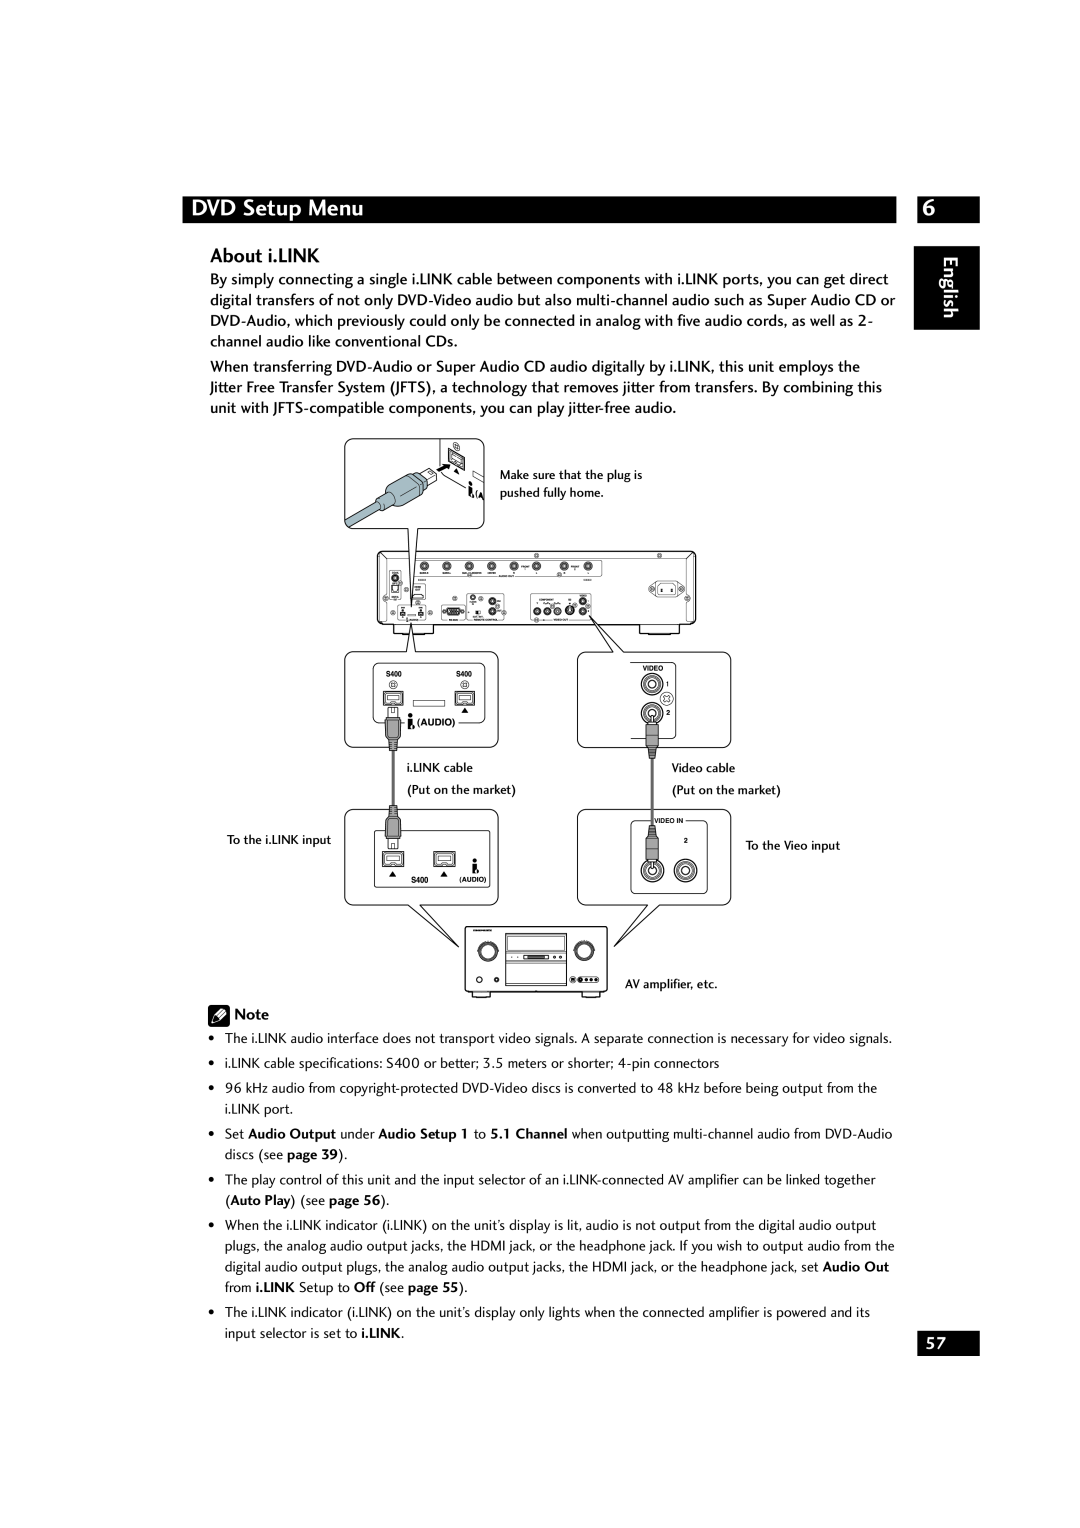 Marantz DV9600 manual About i.LINK, DVD Setup Menu, English, To the Vieo input 